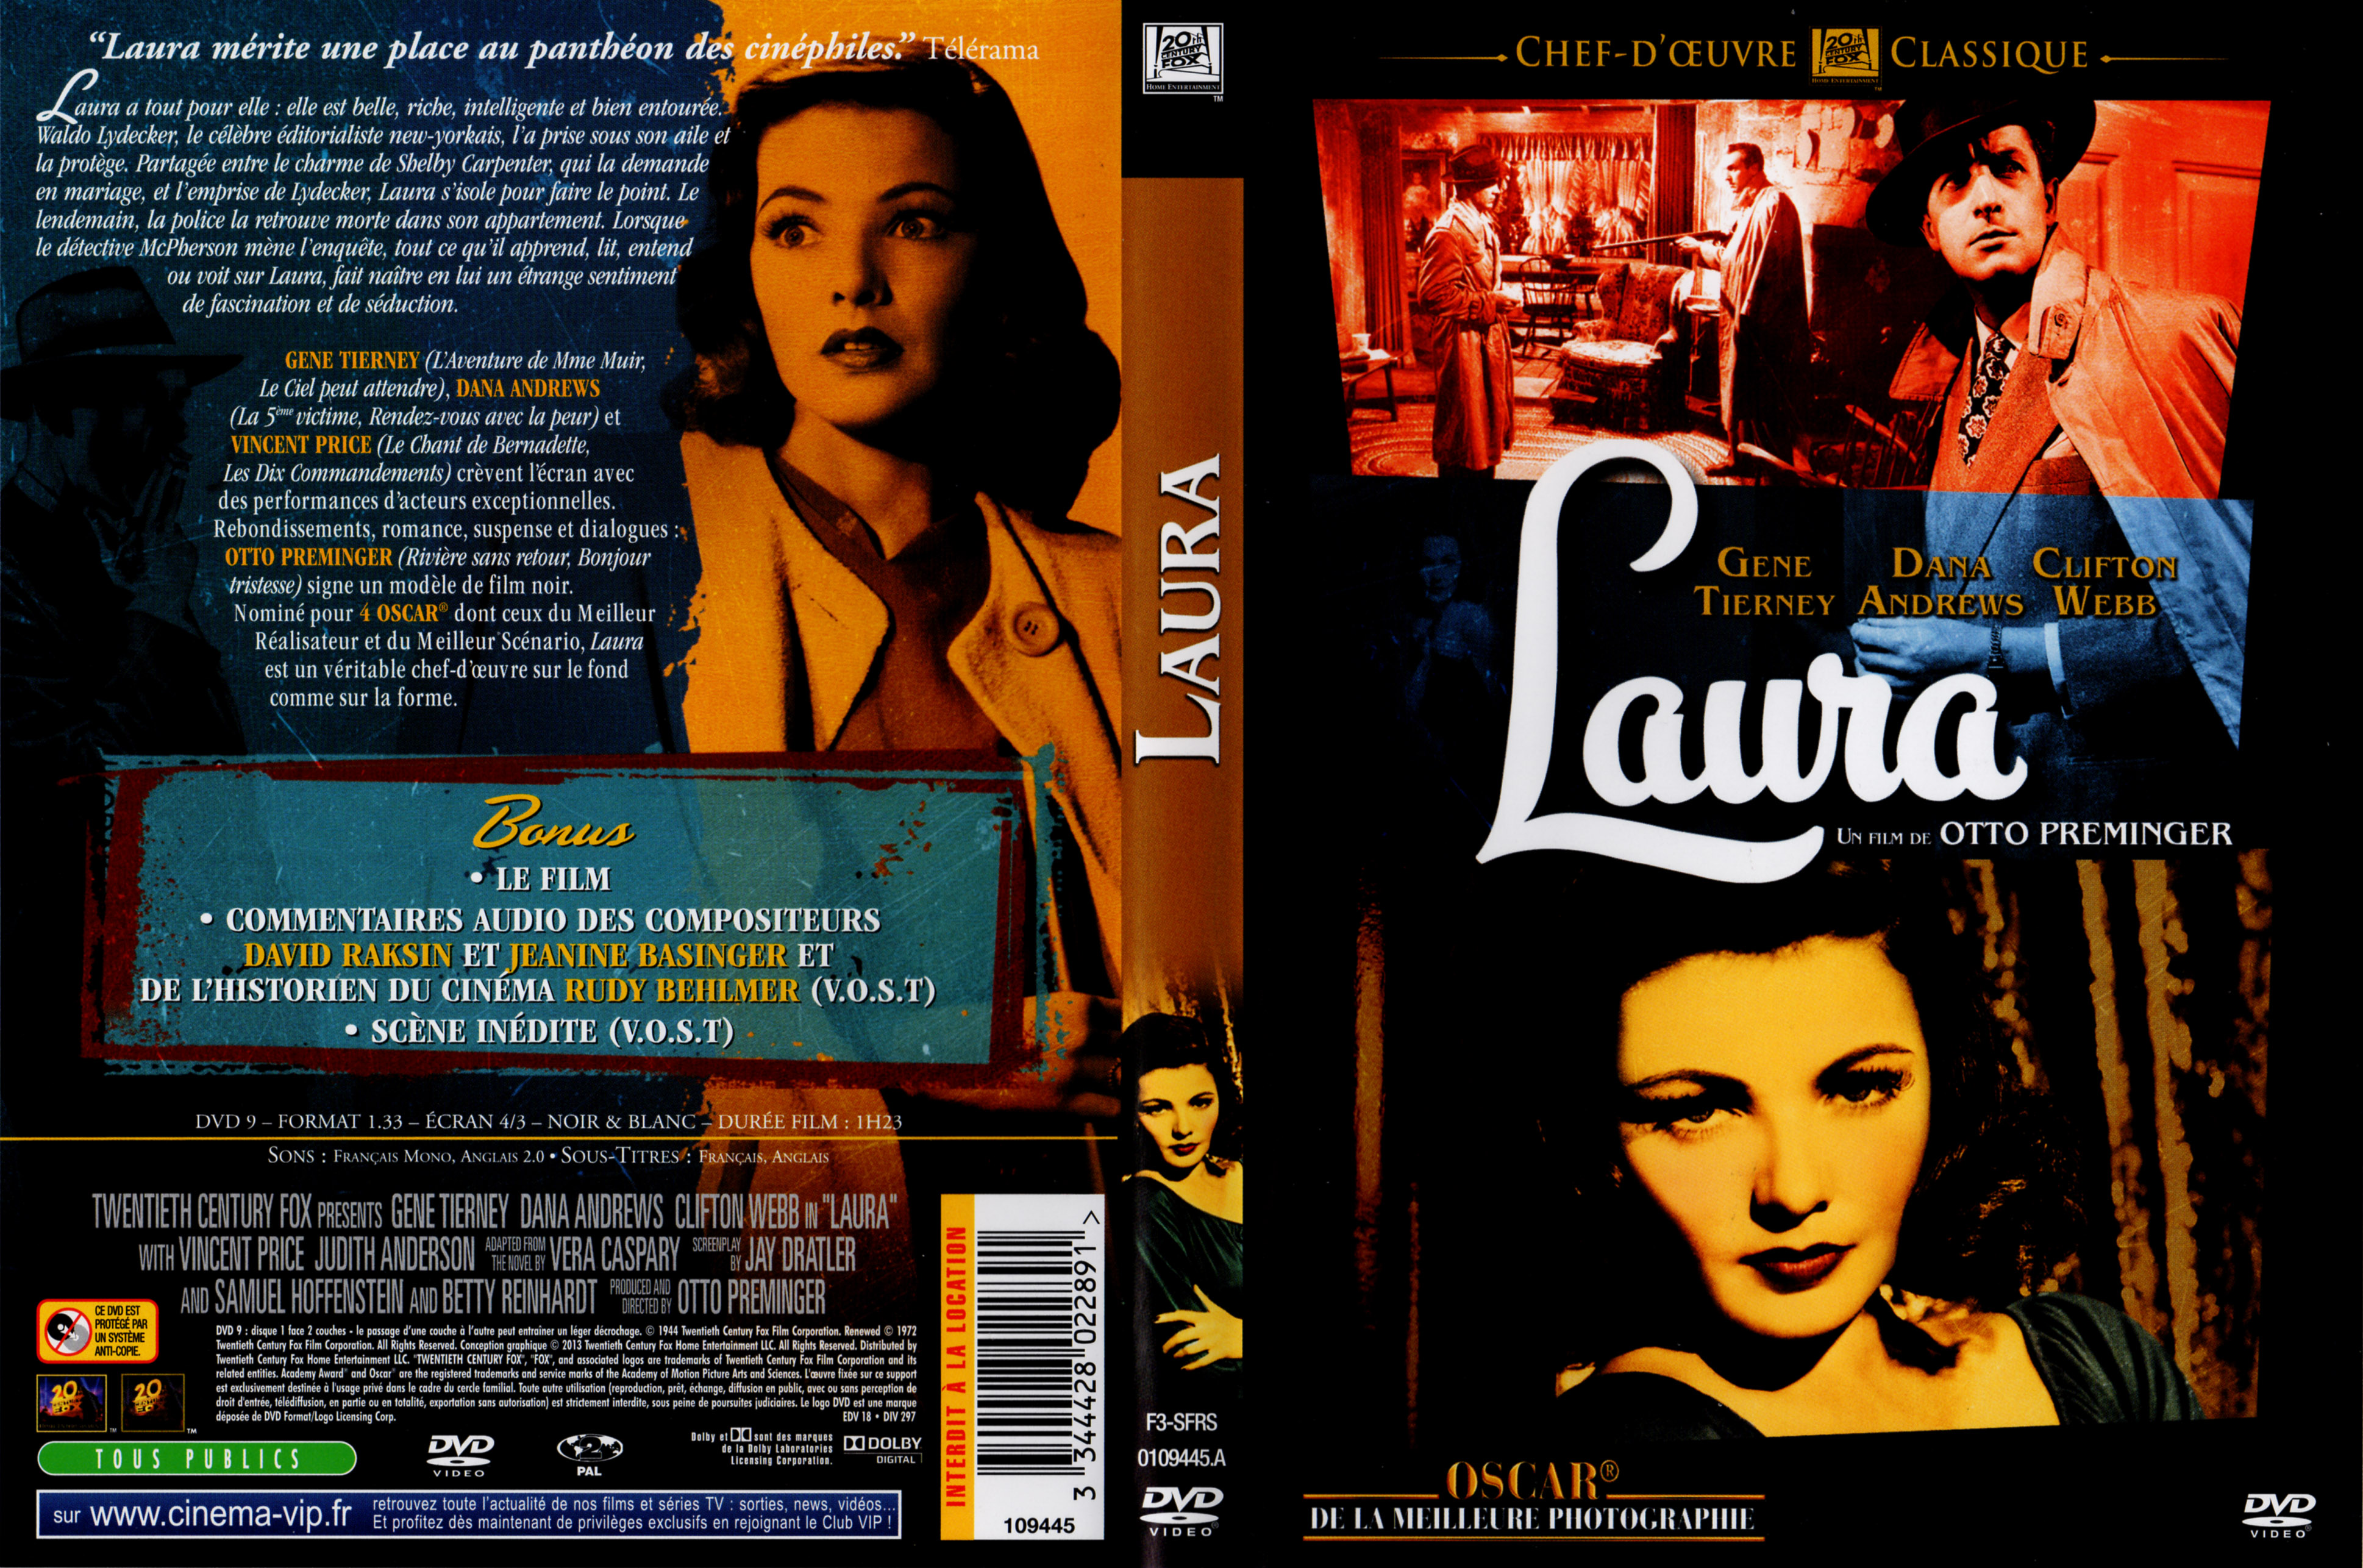 Jaquette DVD Laura (1944) v2